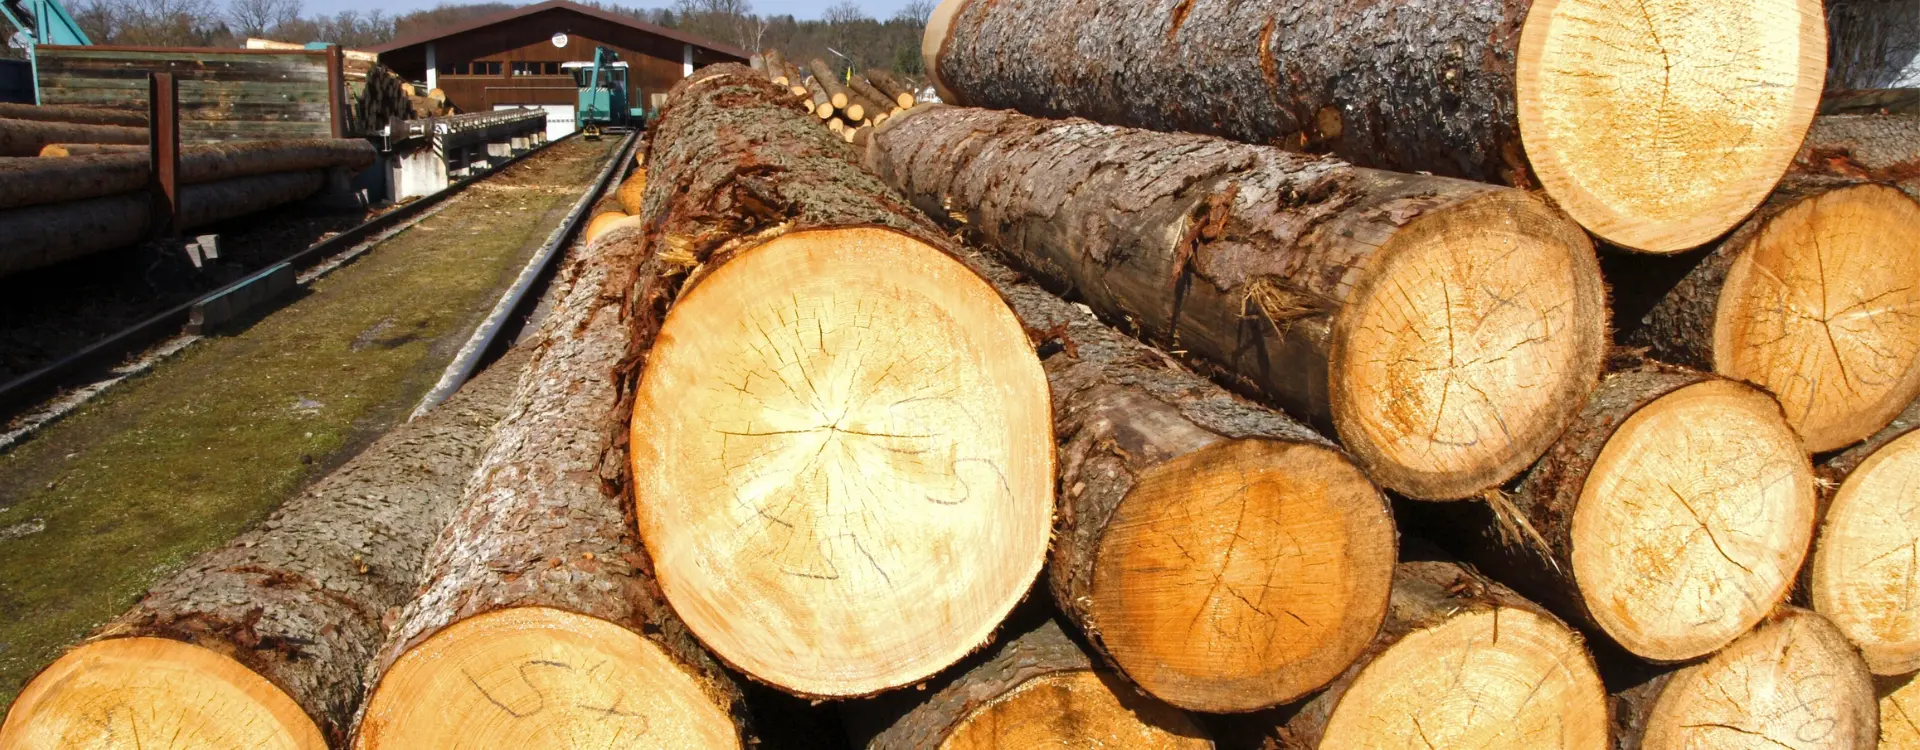 suv spills lumber